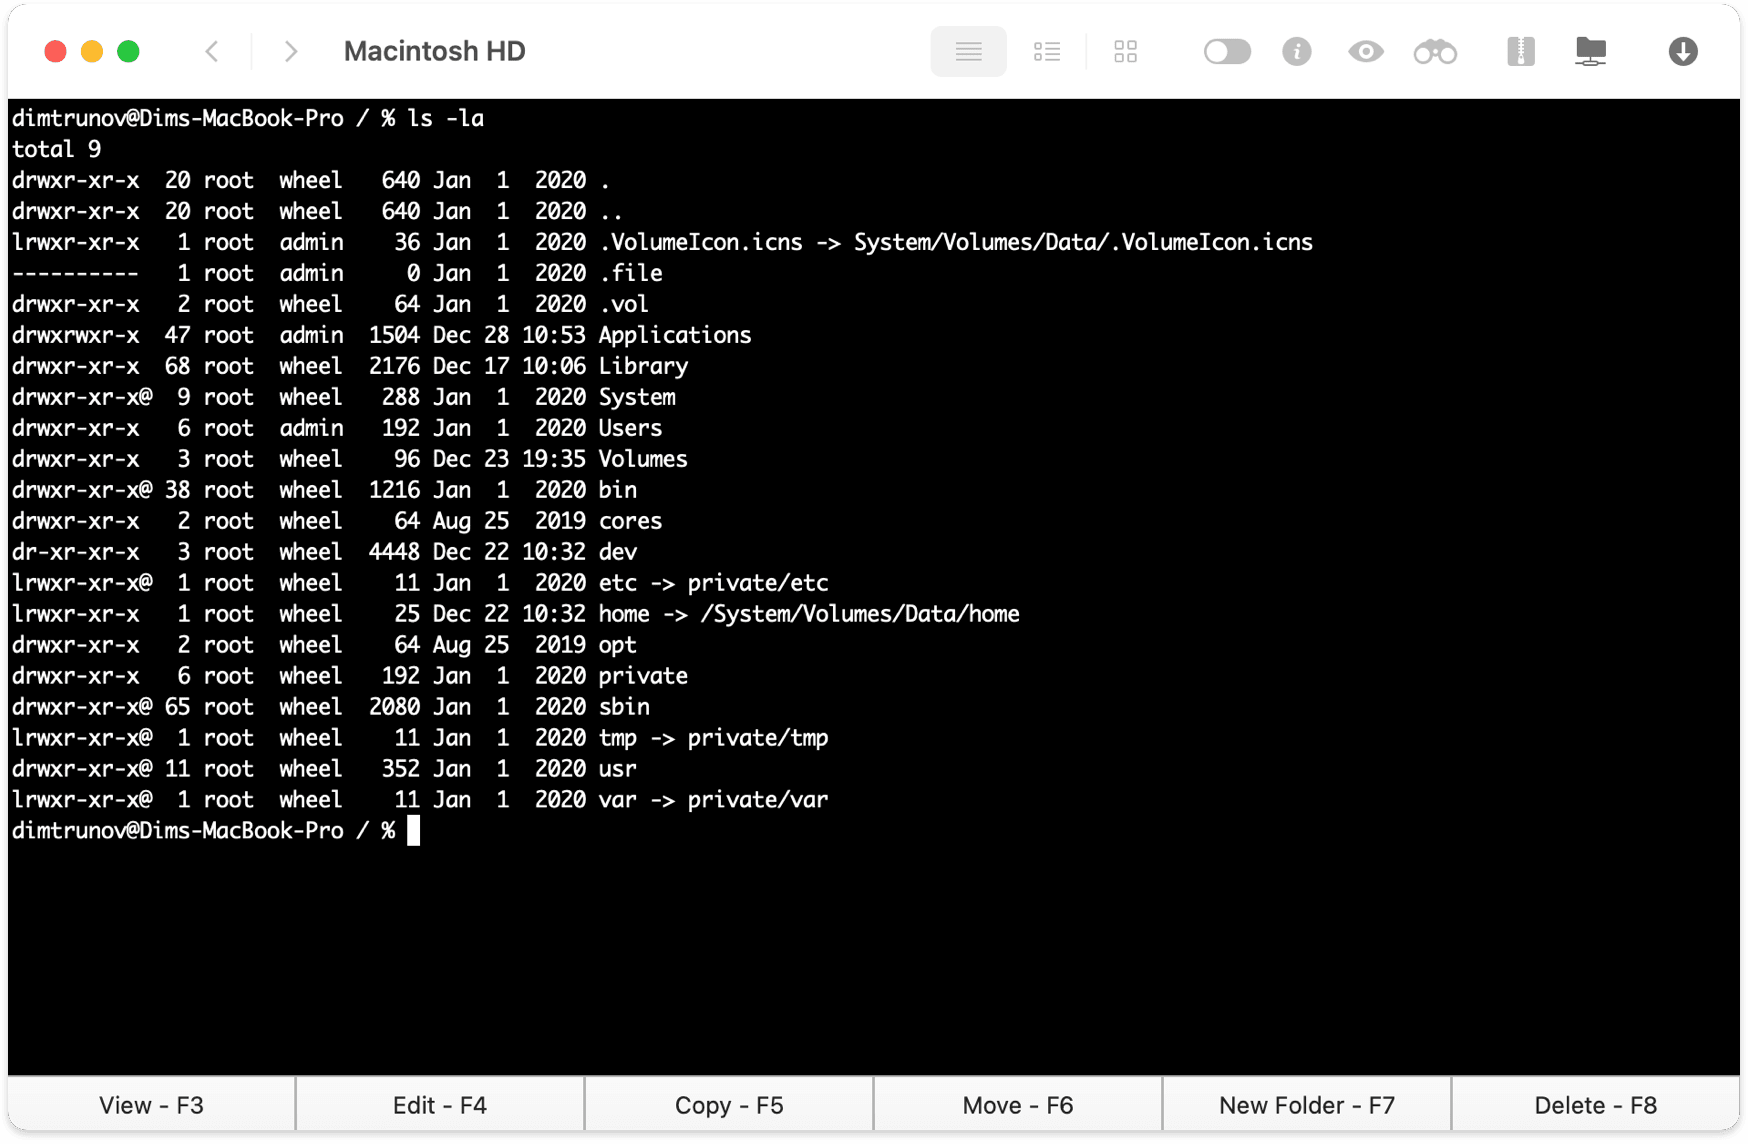 mac usb serial terminal emulator